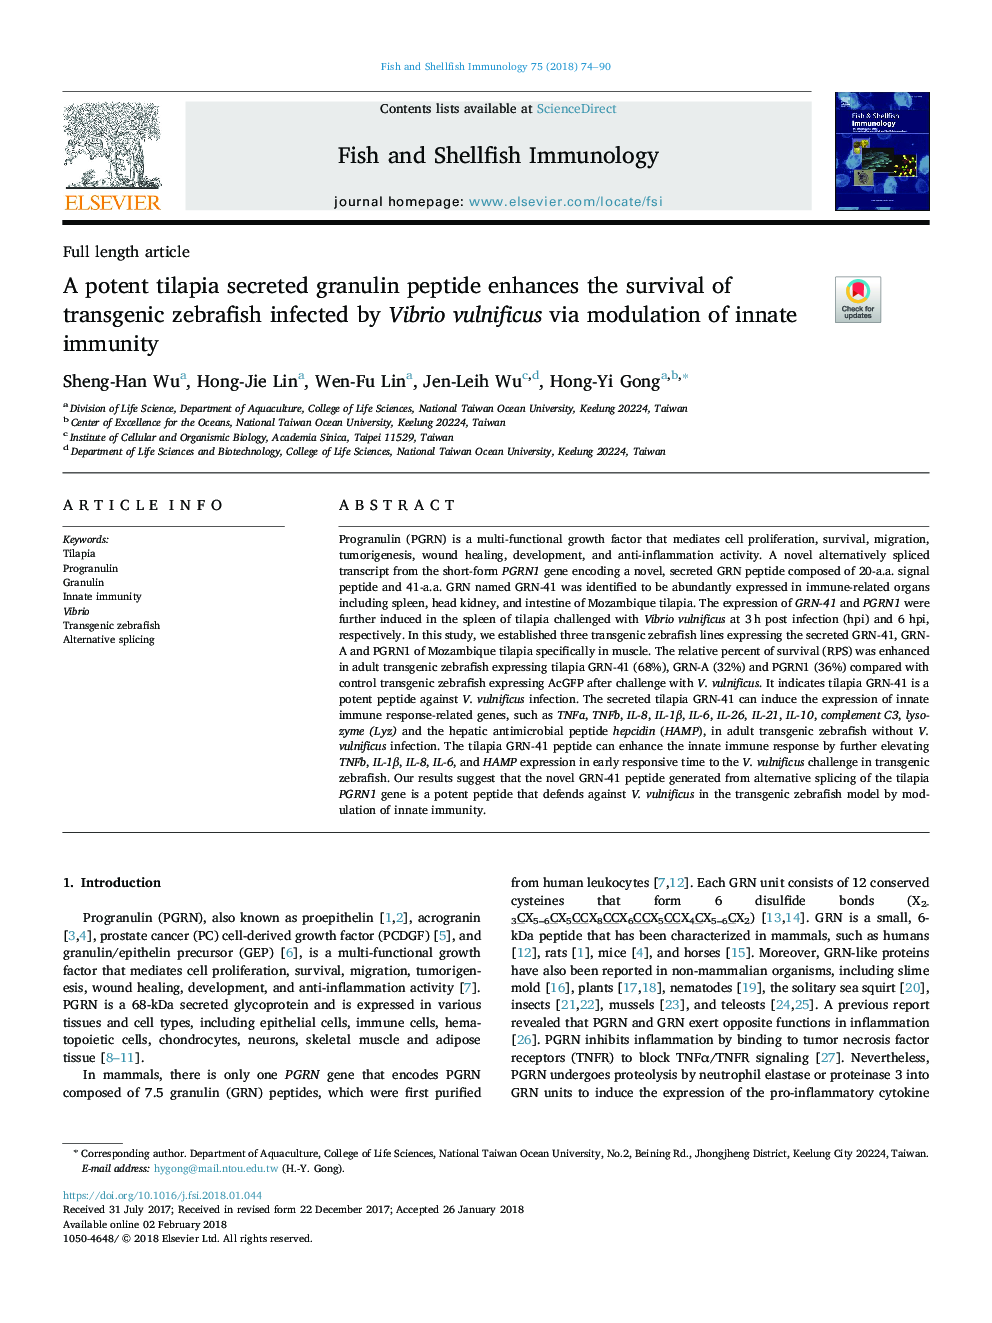 A potent tilapia secreted granulin peptide enhances the survival of transgenic zebrafish infected by Vibrio vulnificus via modulation of innate immunity